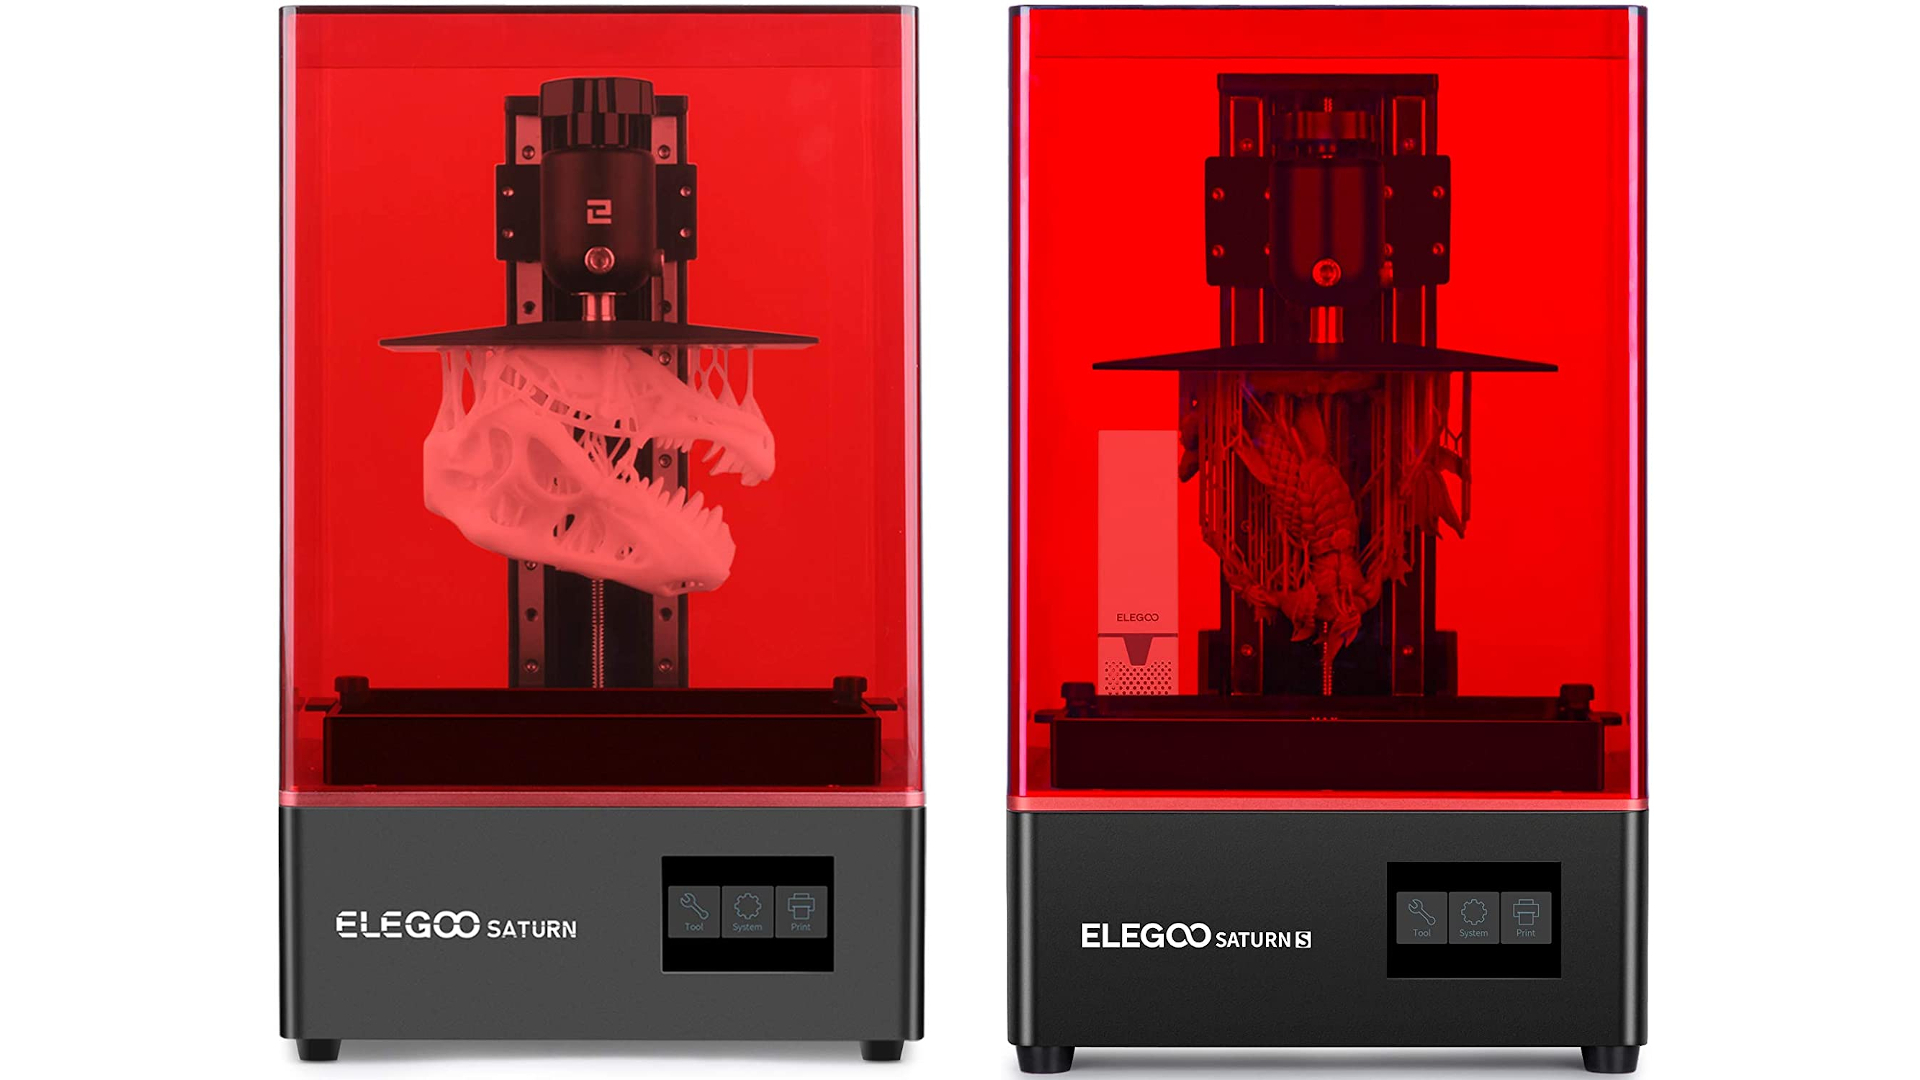 Prime Day 3D printer deal: Save 27% on Elegoo Saturn & Saturn S resin  printers